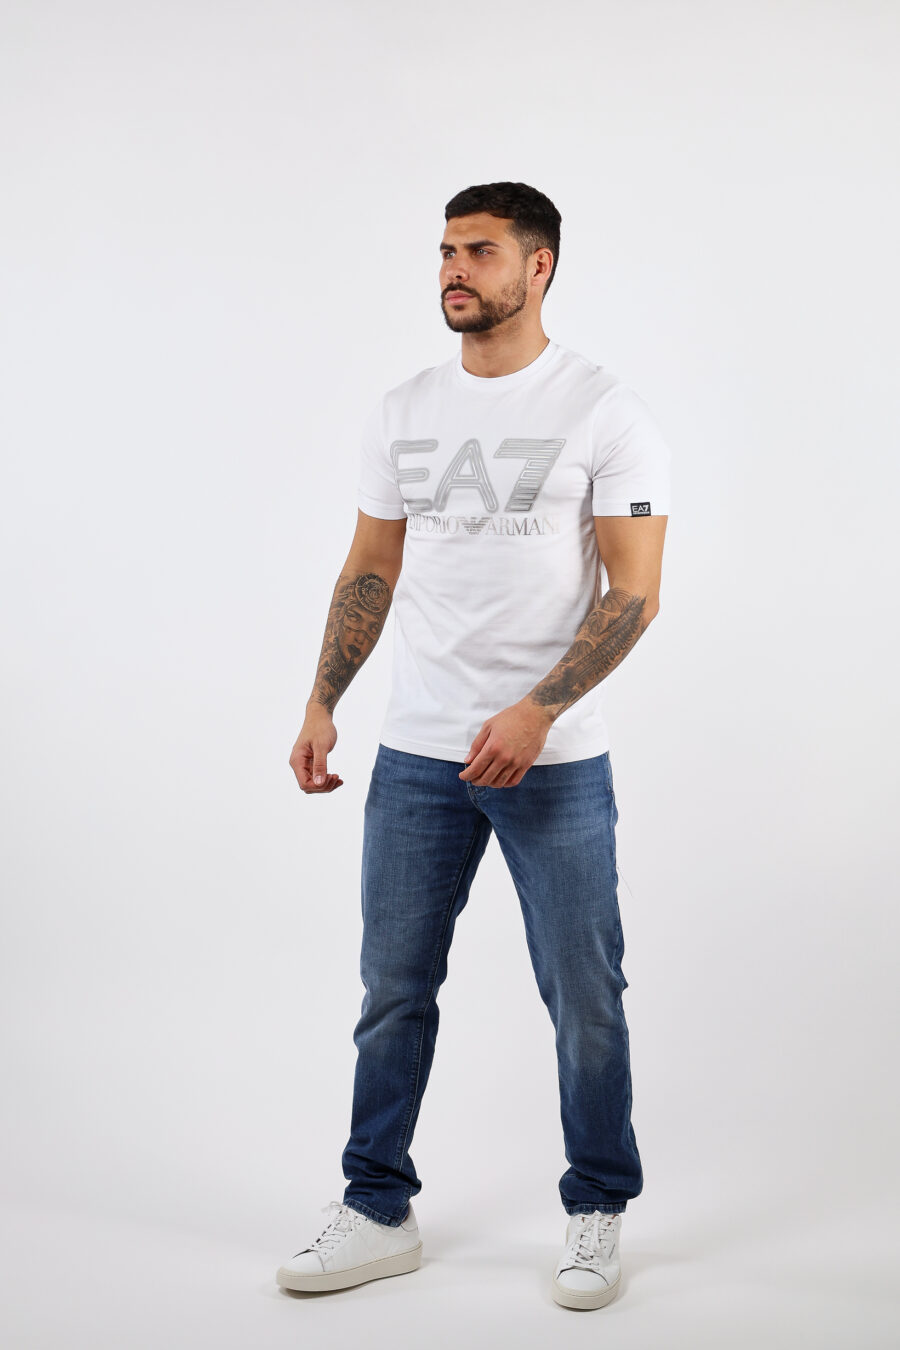 Weißes T-Shirt mit neon-silbernem "lux identity" Maxilogo - BLS Fashion 21